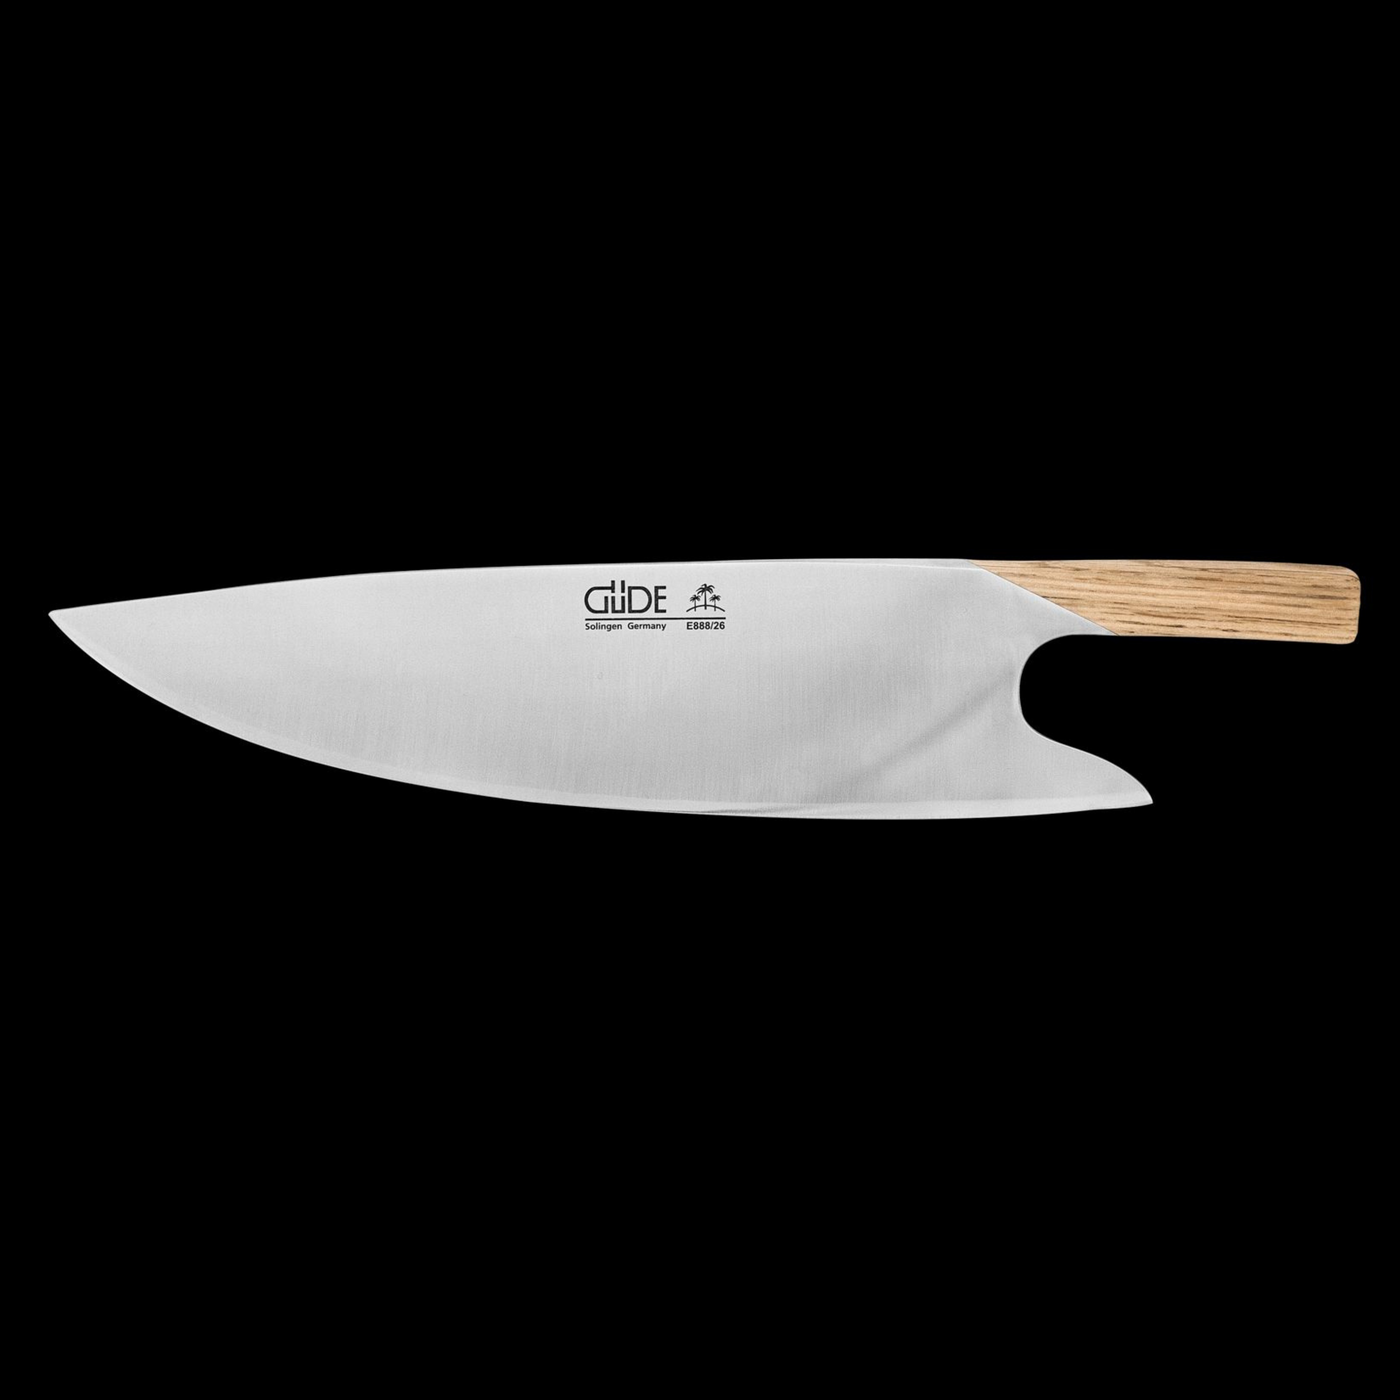 Gude Multi-Use Chef's  Knife Witrh Oak Wood Handle, 10-in. - Kitchen Universe